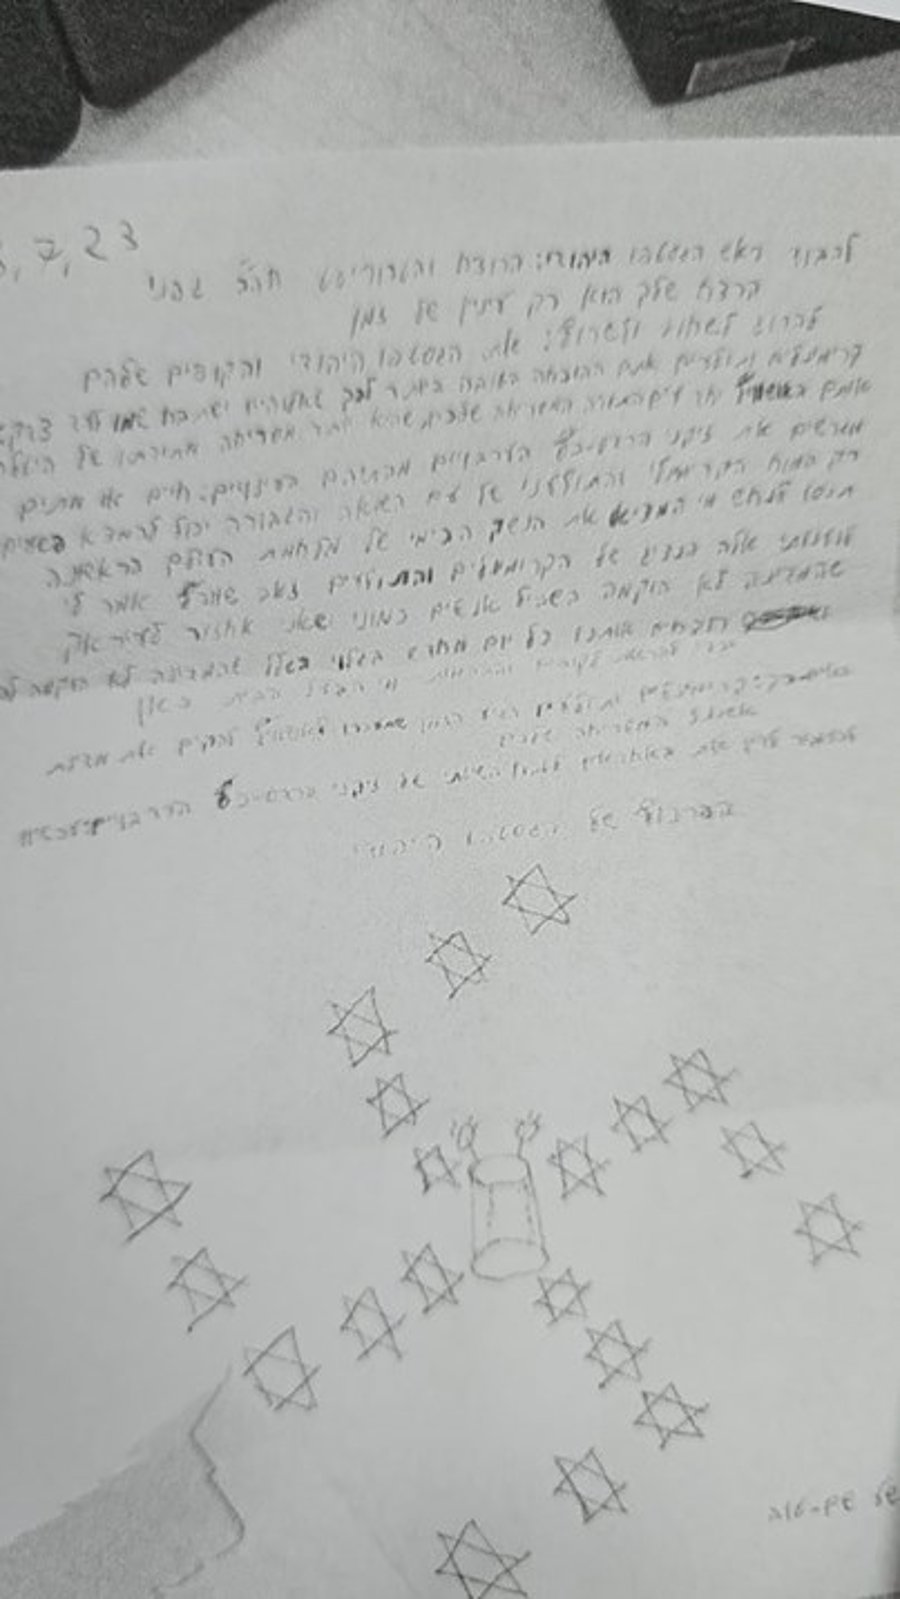 The letter sent to Gafni's office